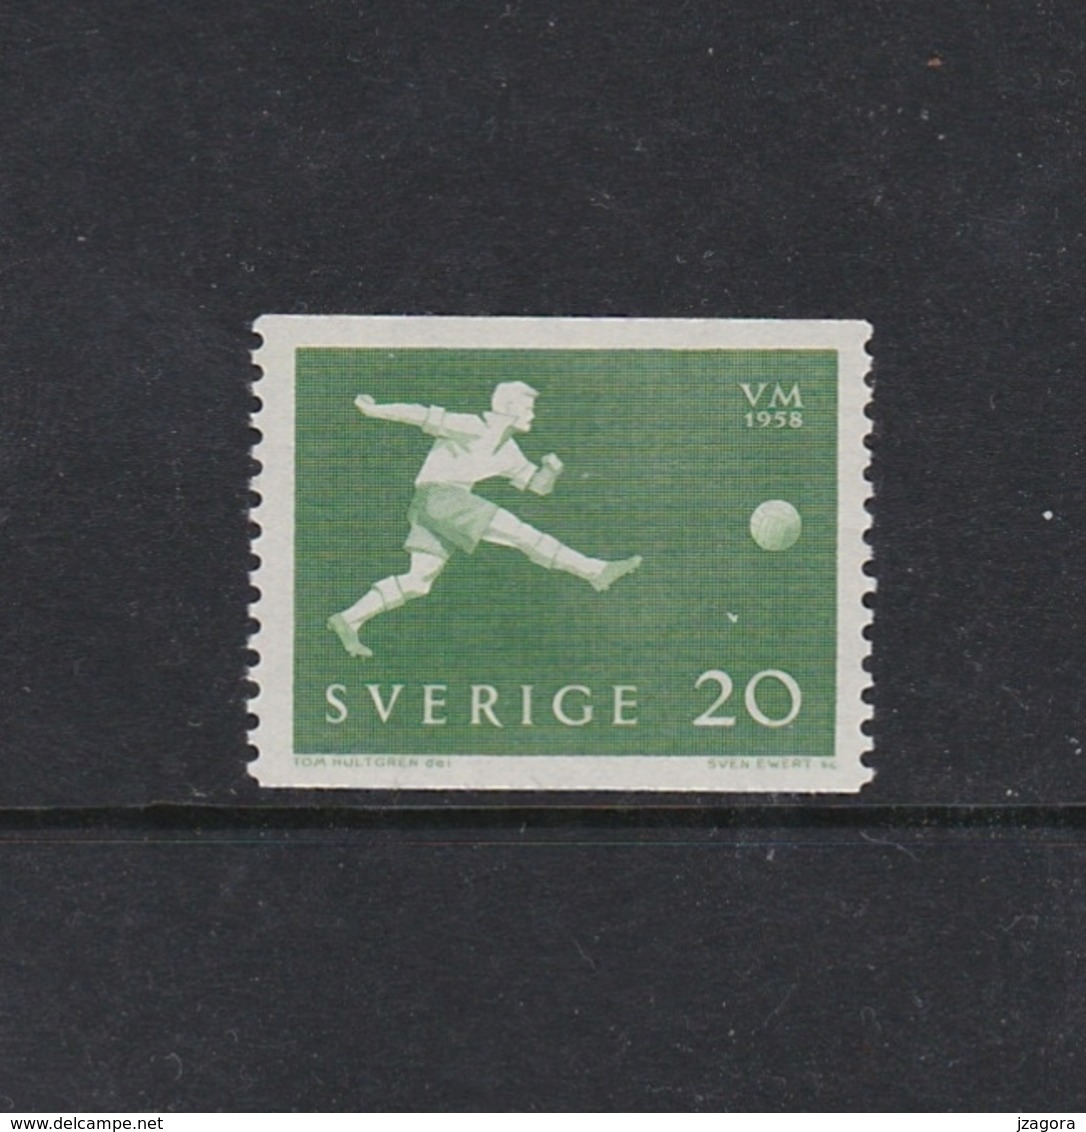 SOCCER FOOTBALL WORLD CHAMPIONSHIP - MUNDIAL 1958 - SWEDEN SCHWEDEN SUEDE MI 439 A MNH - 1958 – Suède